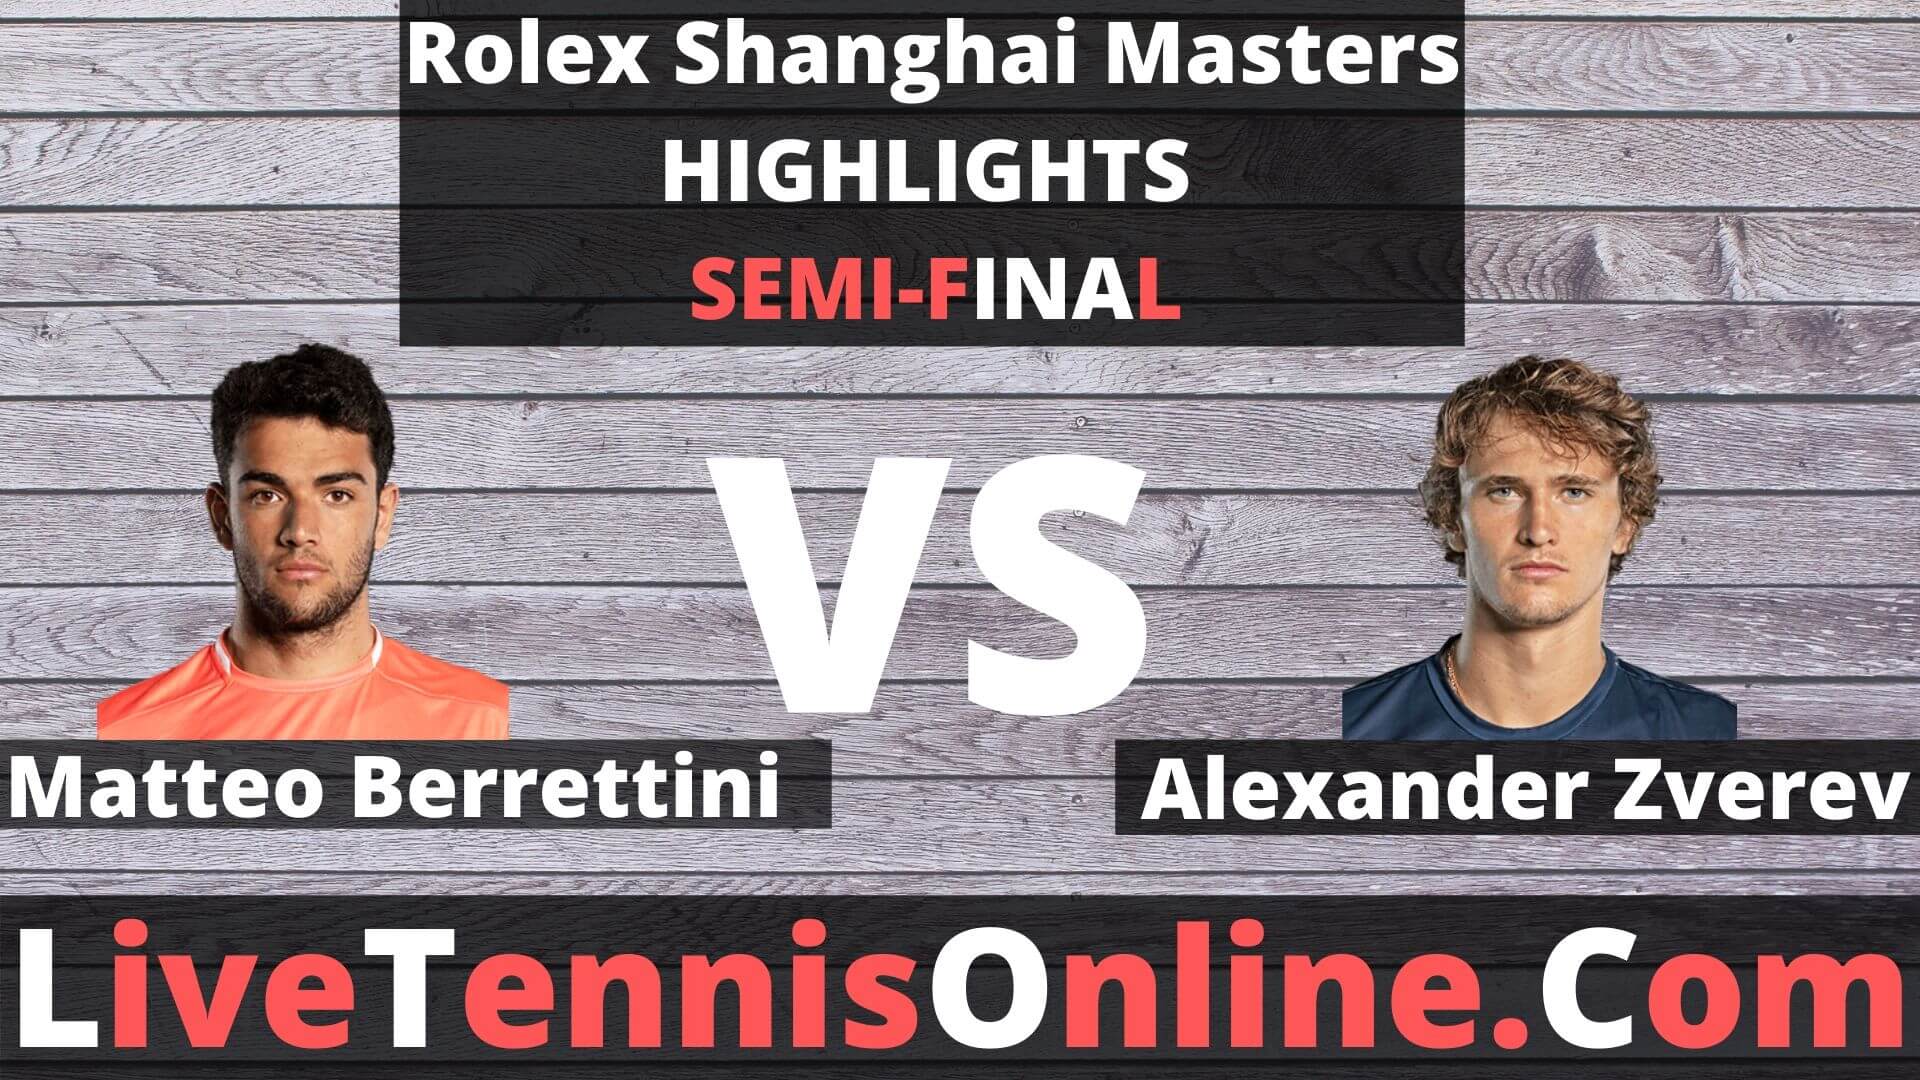 Matteo Berrettini Vs Alexander Zverev Highlights 2019 Rolex Shanghai Masters SF